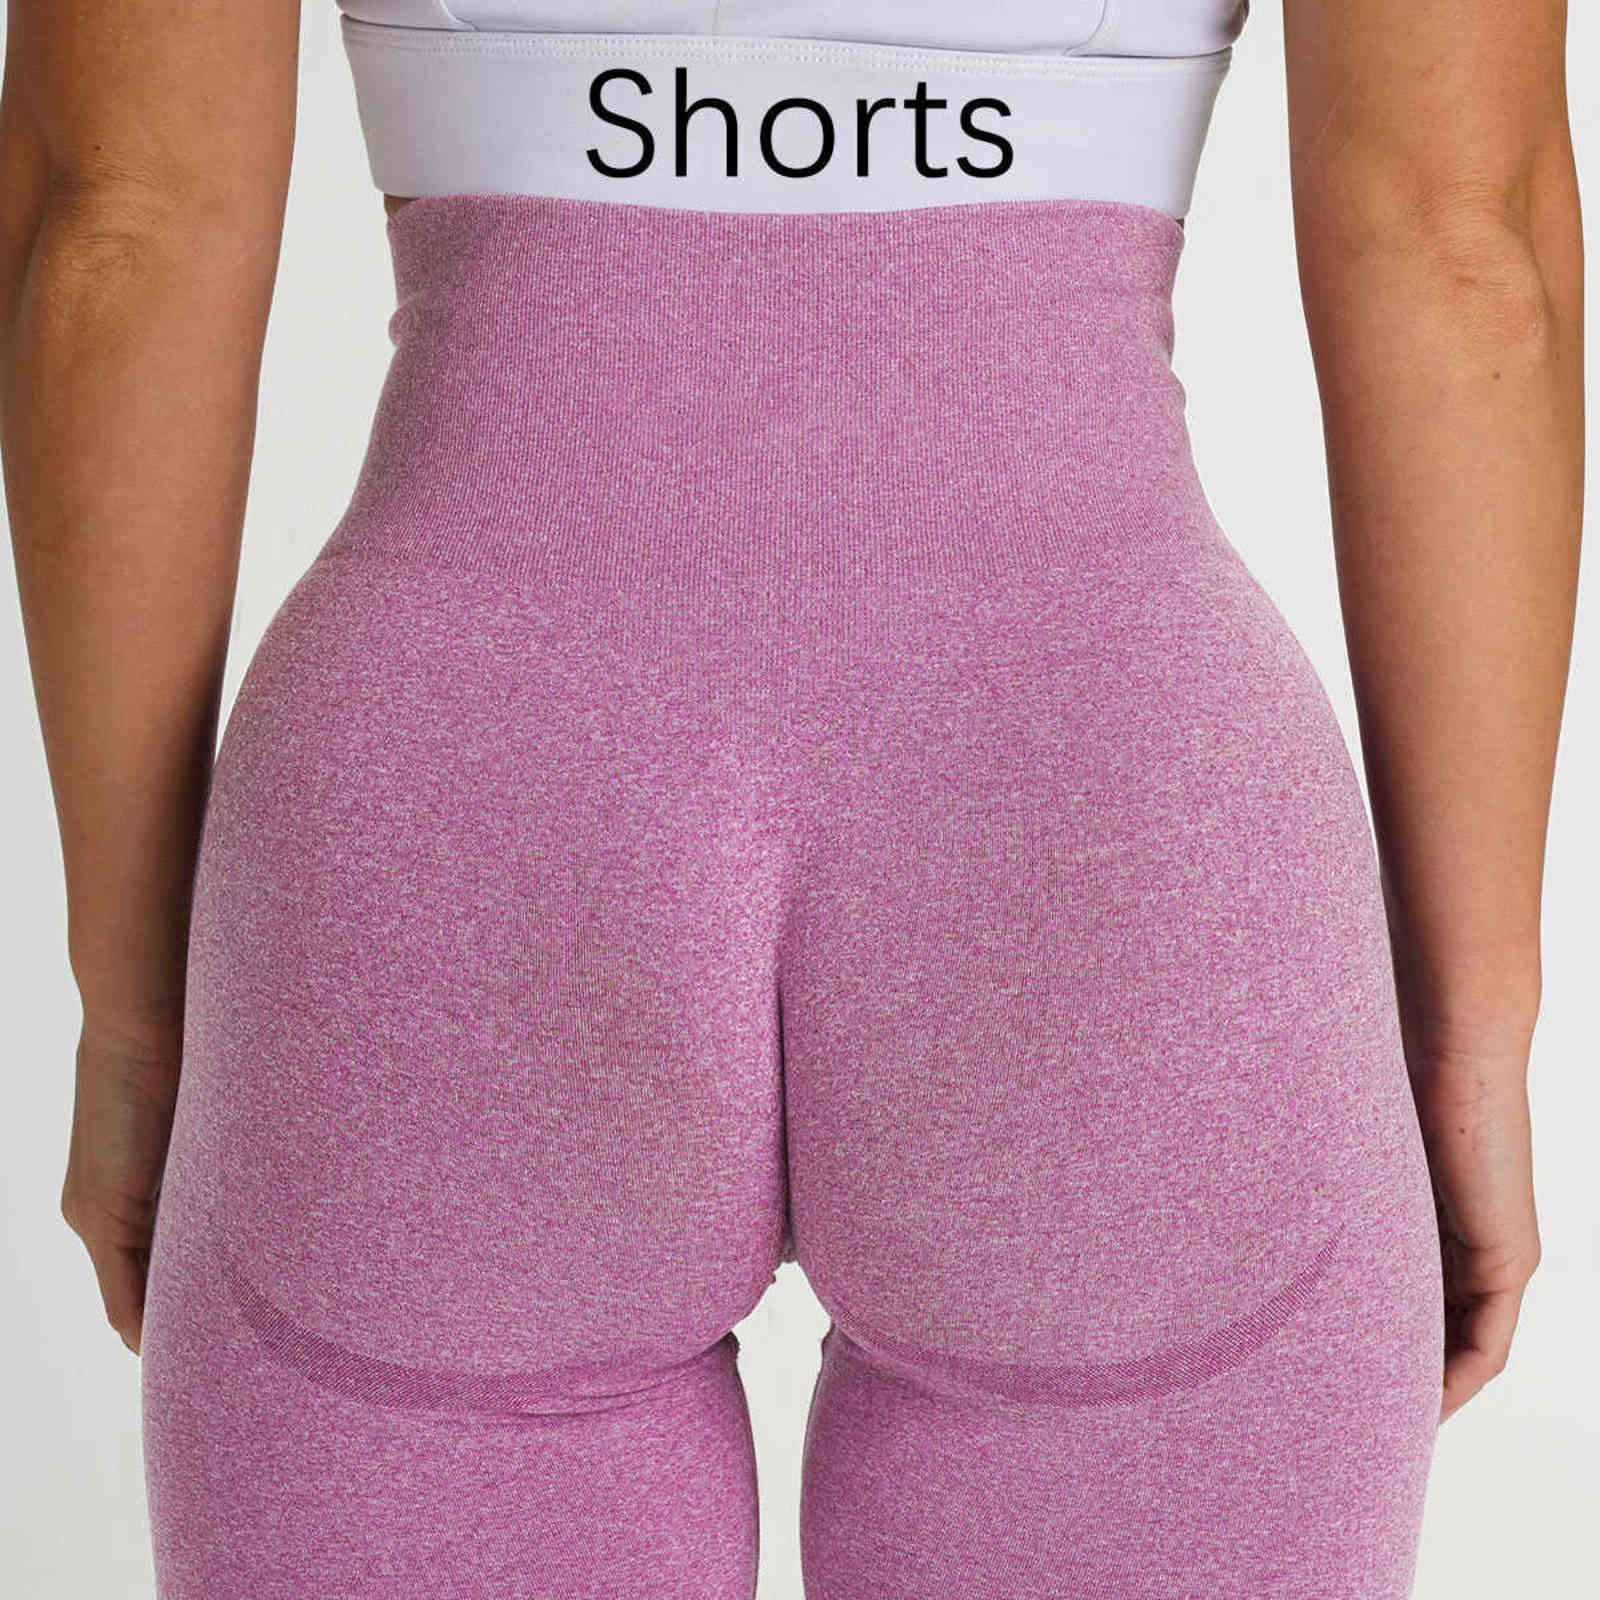 Shorts rpink